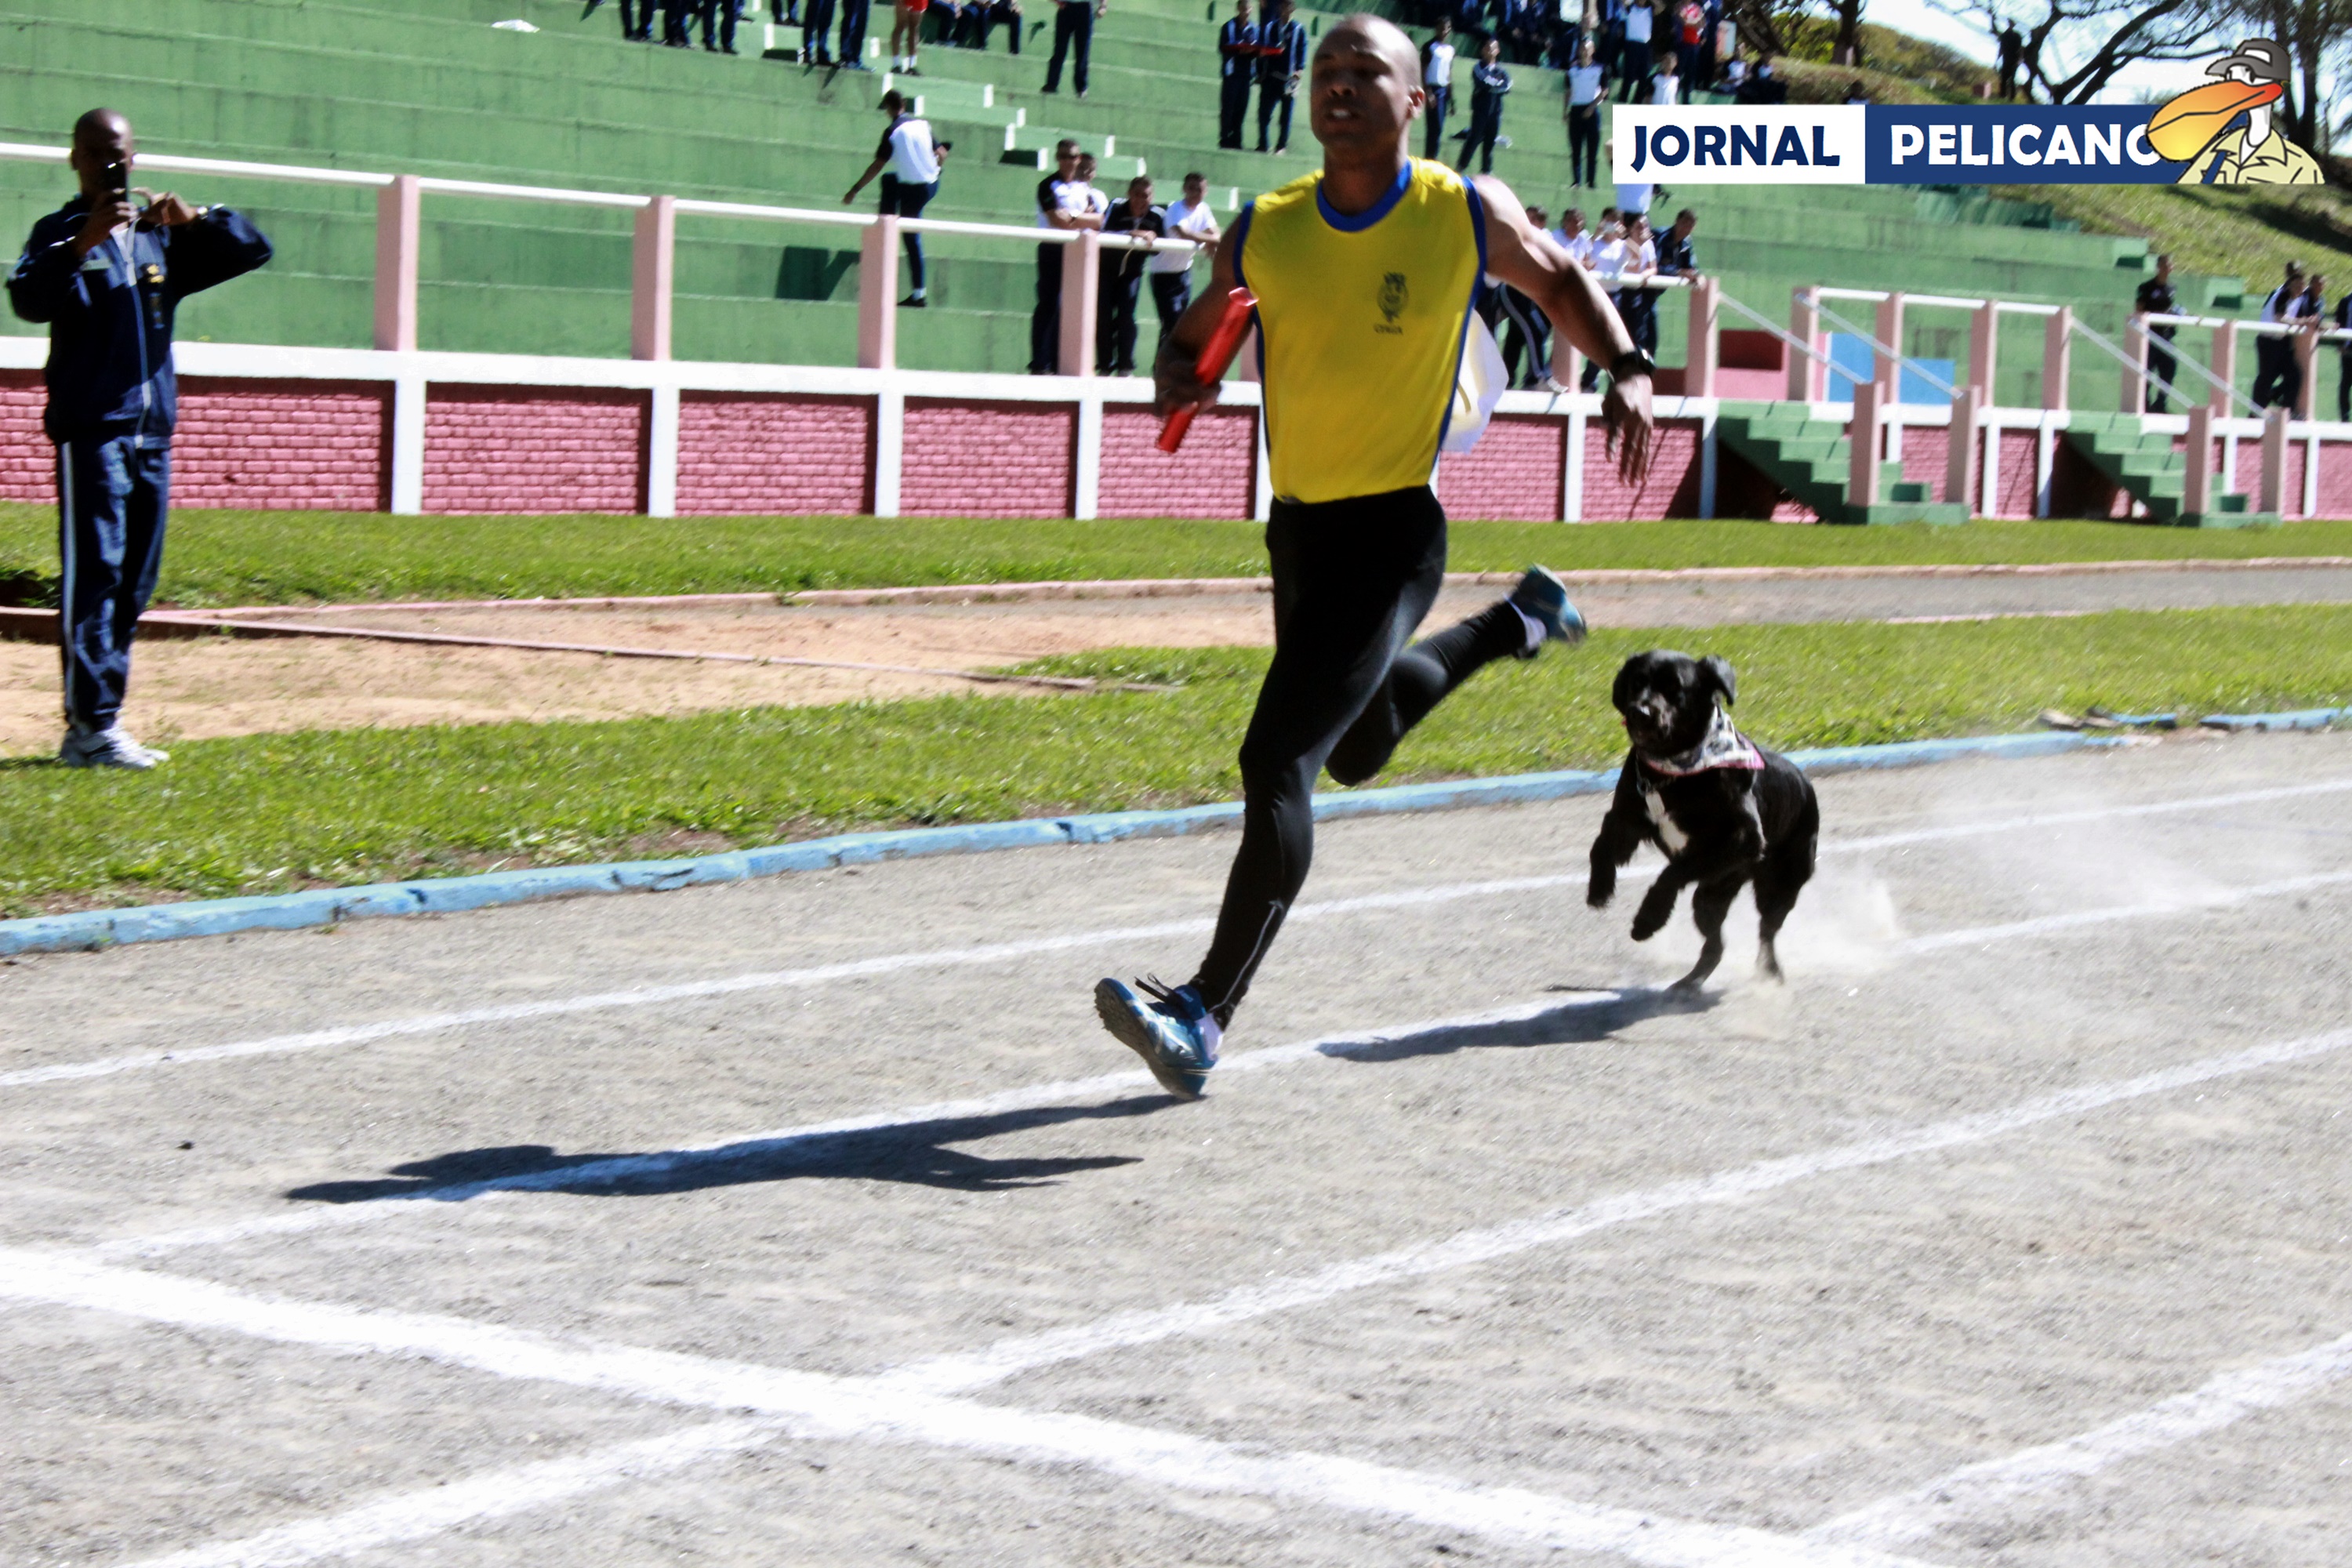 Al. De Souza da EFOMM corre ao lado da mascote do CIAGA Brisa, no revezamento 4x400. (Foto: Al. Sebastian / Jornal Pelicano)